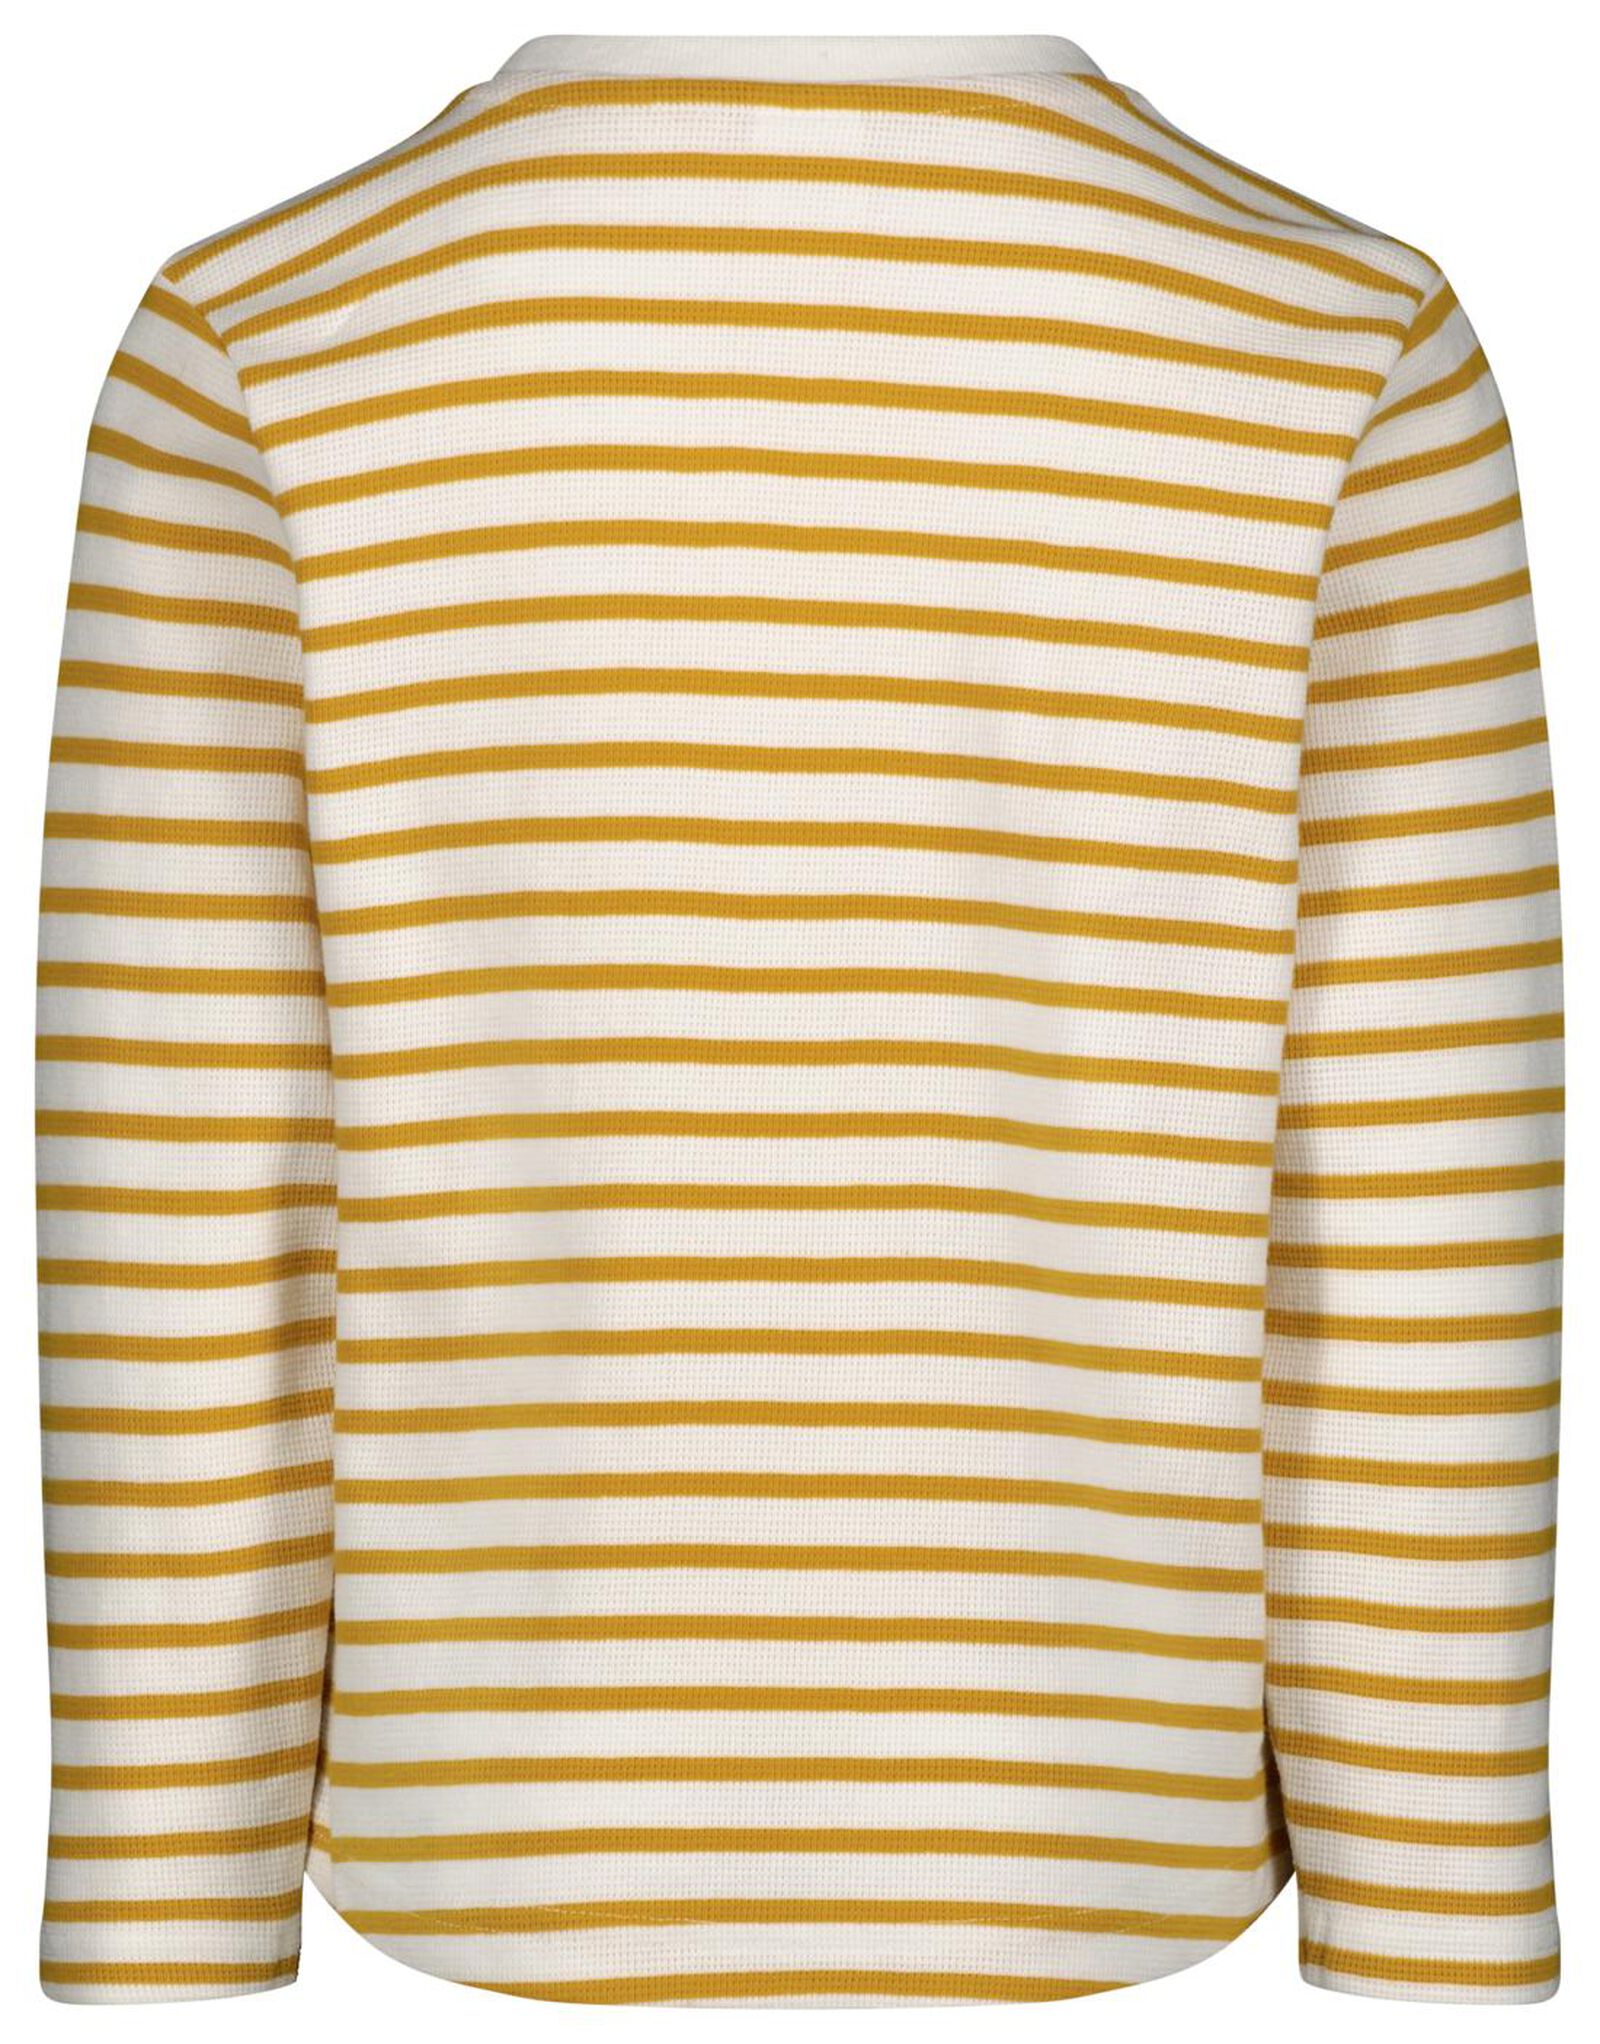 t-shirt enfant rayures jaune jaune - 1000026227 - HEMA